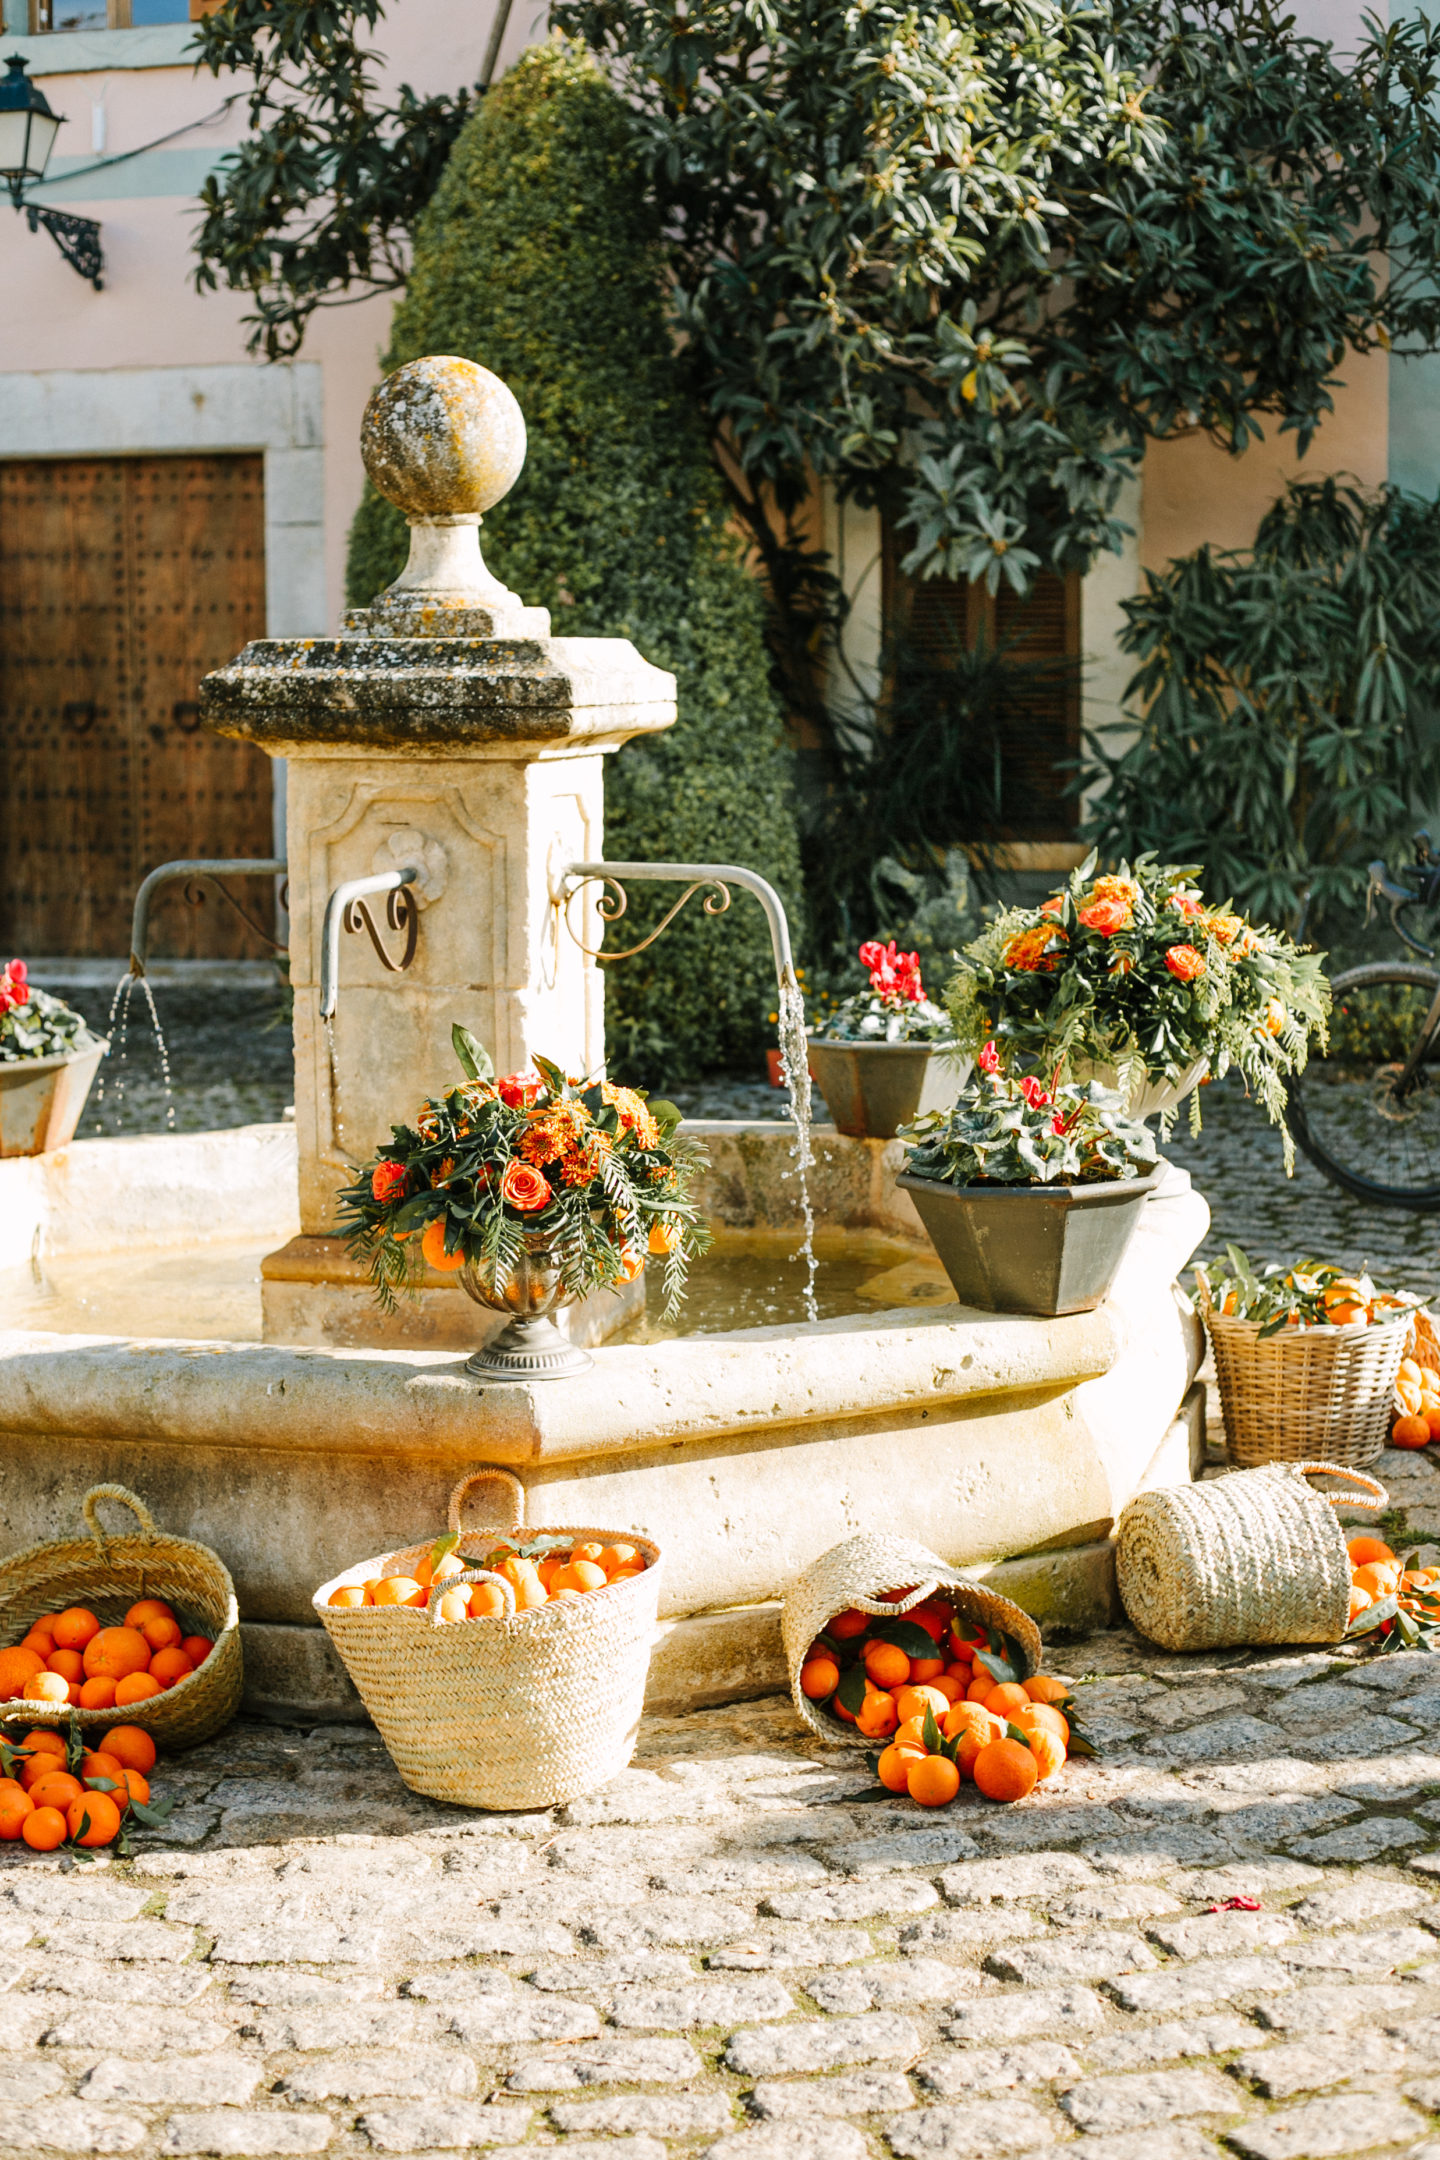 Beautiful Orange Grove Destination Wedding at Finca Biniagual, Spain